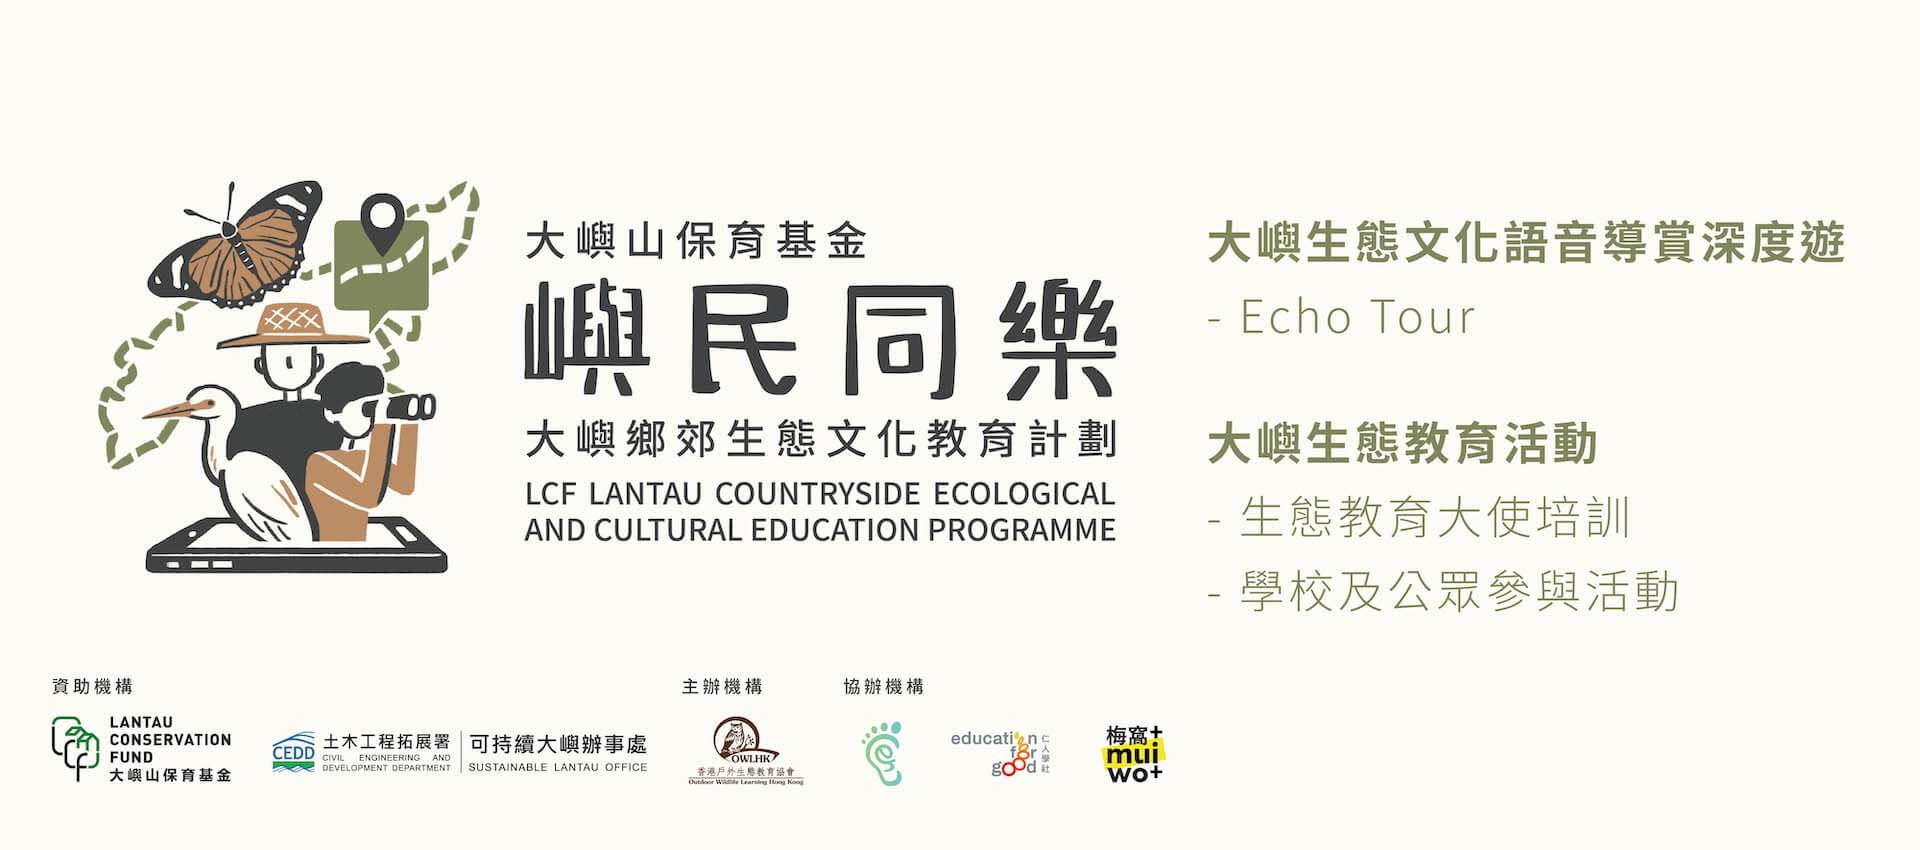 LCF Lantau Countryside Ecological & Cultural Education Programme